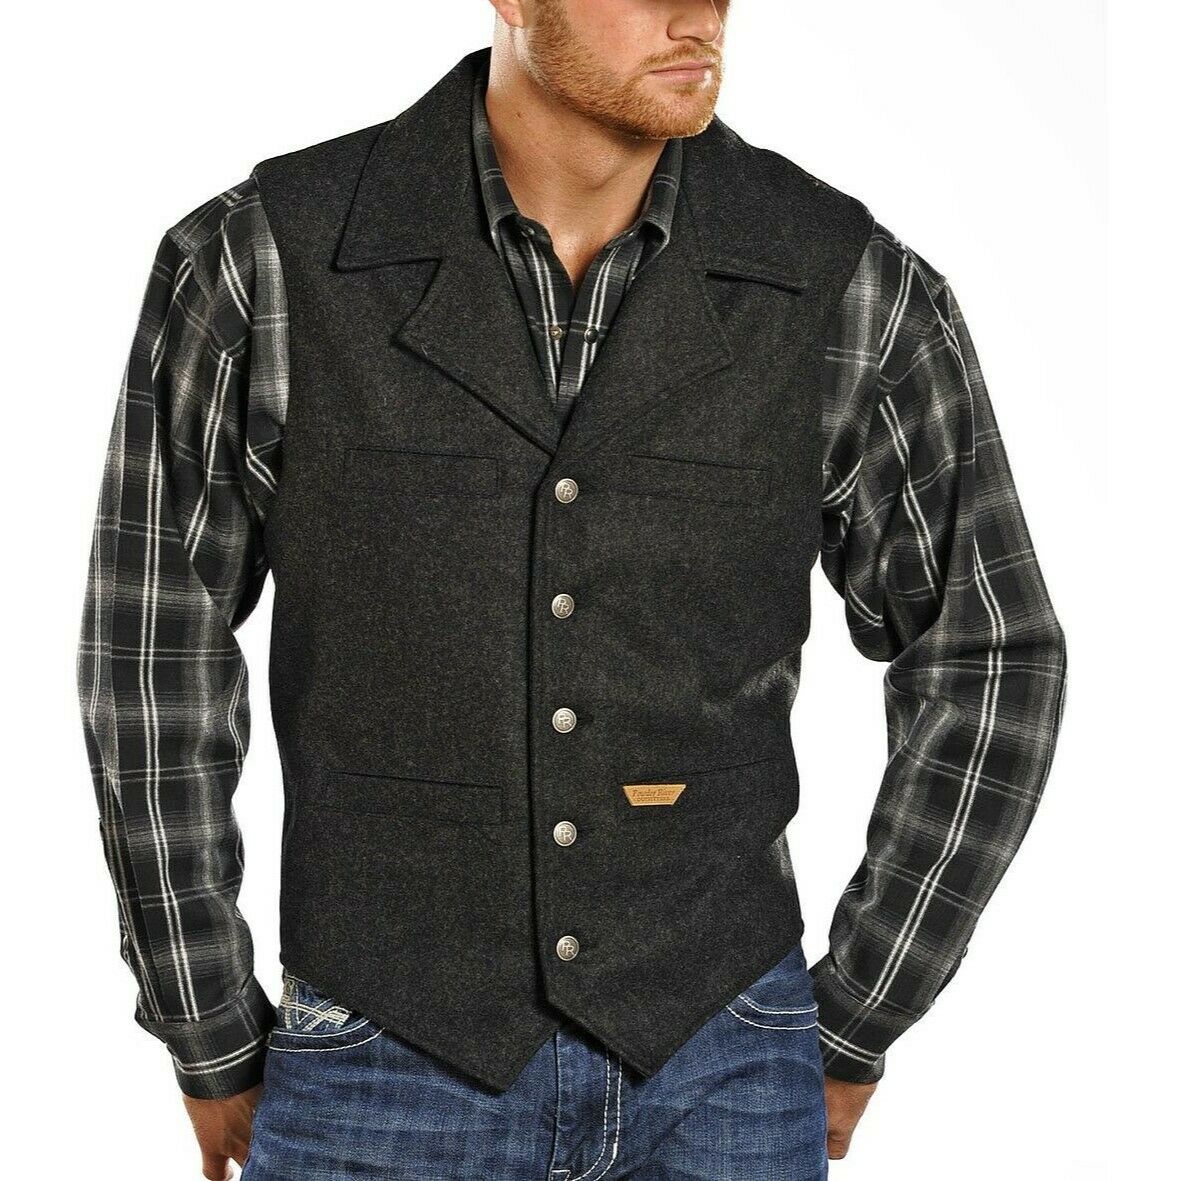 Powder River Outfitters Men's Black Wool Vest 98-1176-01